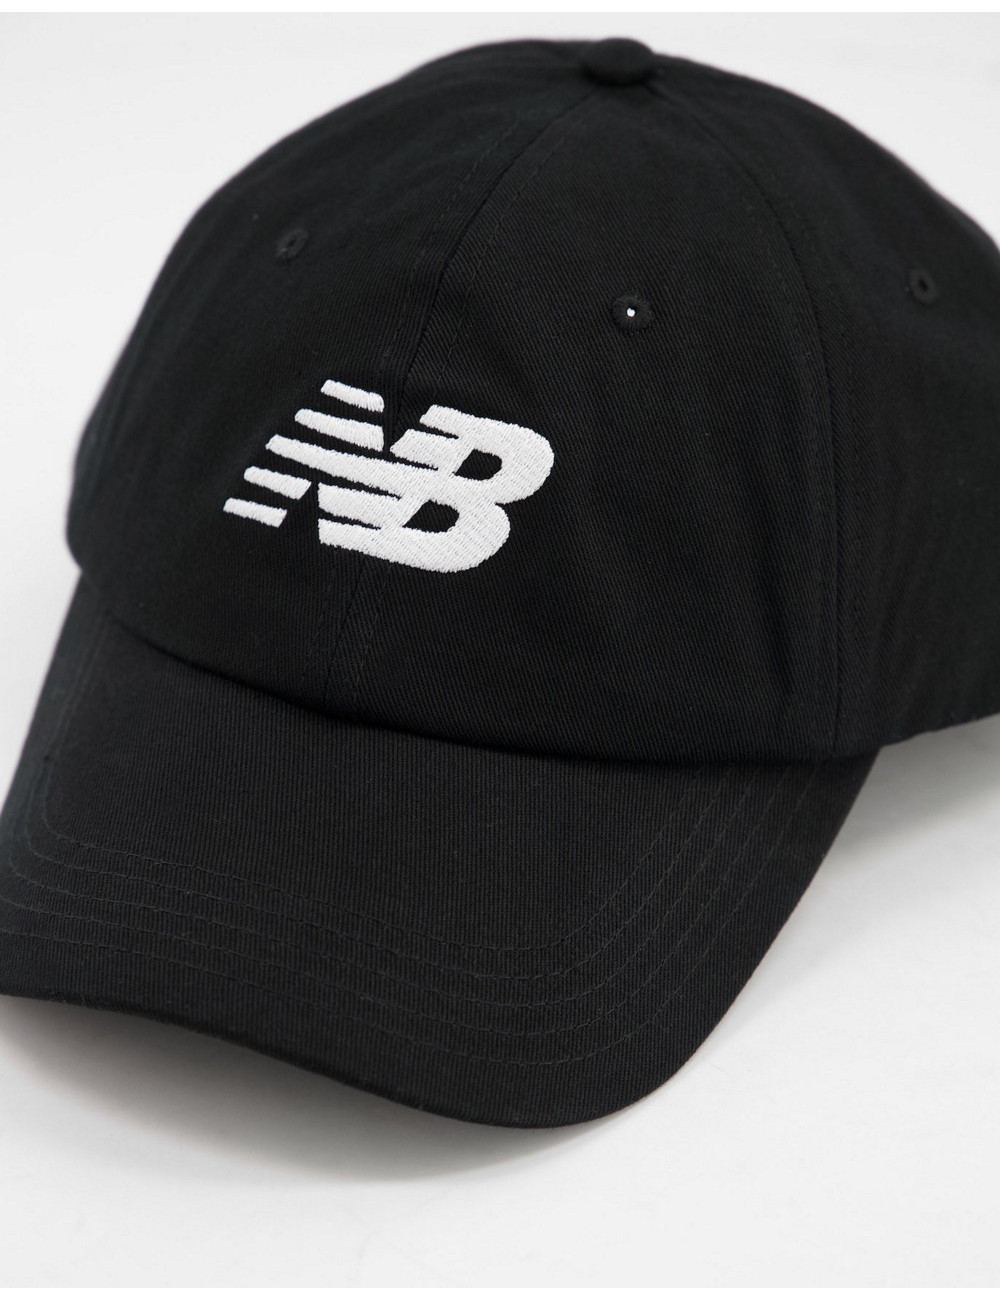 New Balance logo cap in black